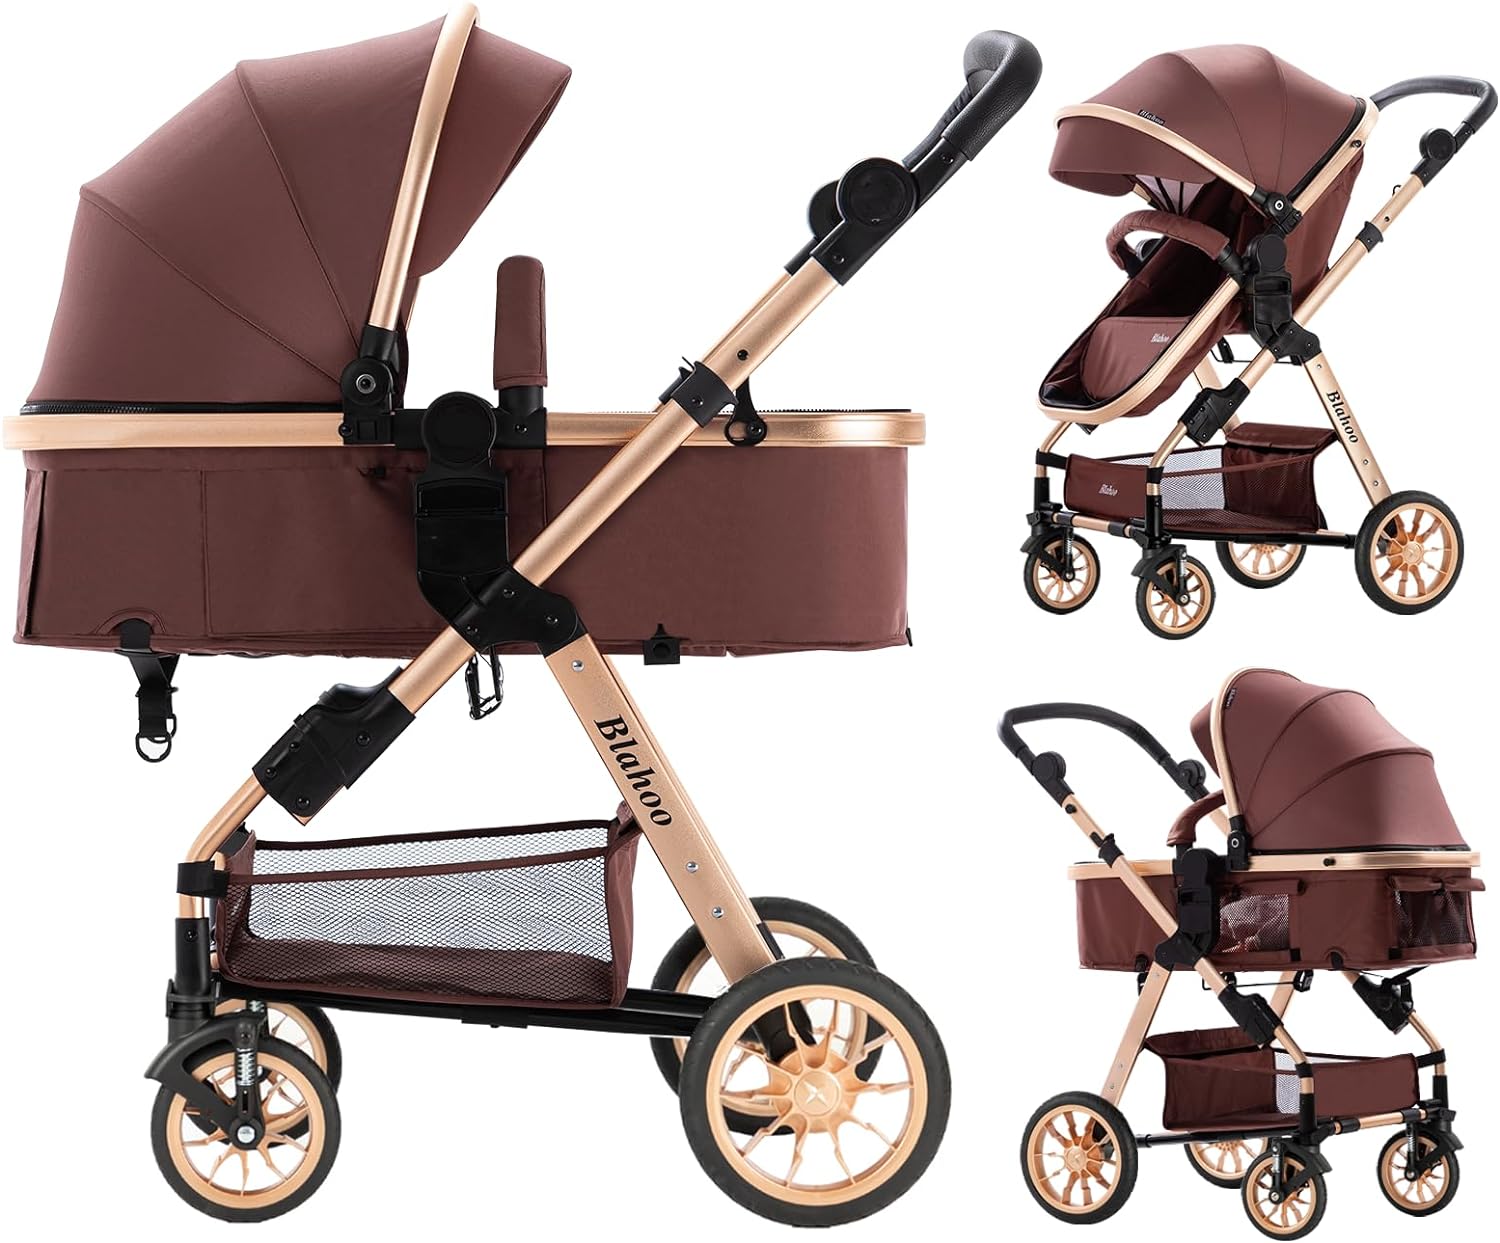 Blahoo Baby Stroller for Toddler,Bassinet Stroller,Foldable Aluminum Alloy Pushchair with Adjustable Backrest,Adjustable Direction Coffee - Blahoo Baby Stroller Review